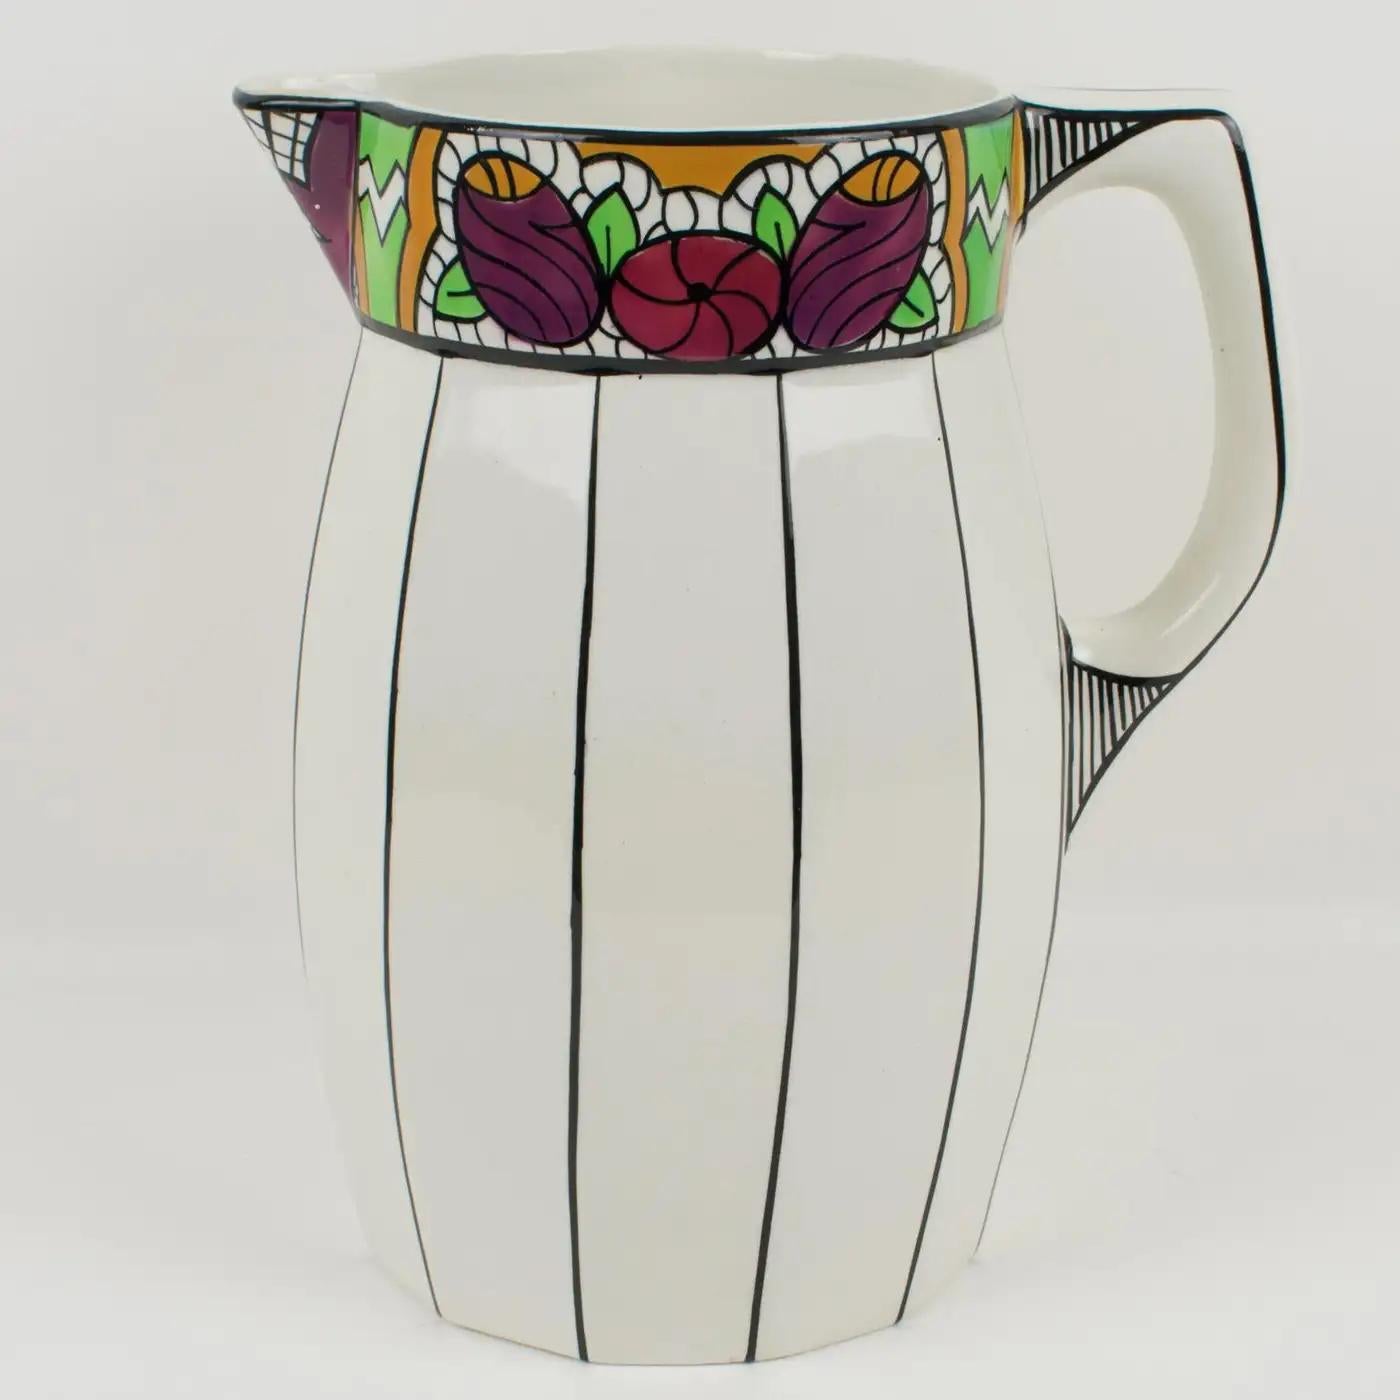 Art Deco Auguste Mouzin Ceramic Toiletry Dresser Bowl, Pitcher and Boxes Set For Sale 3